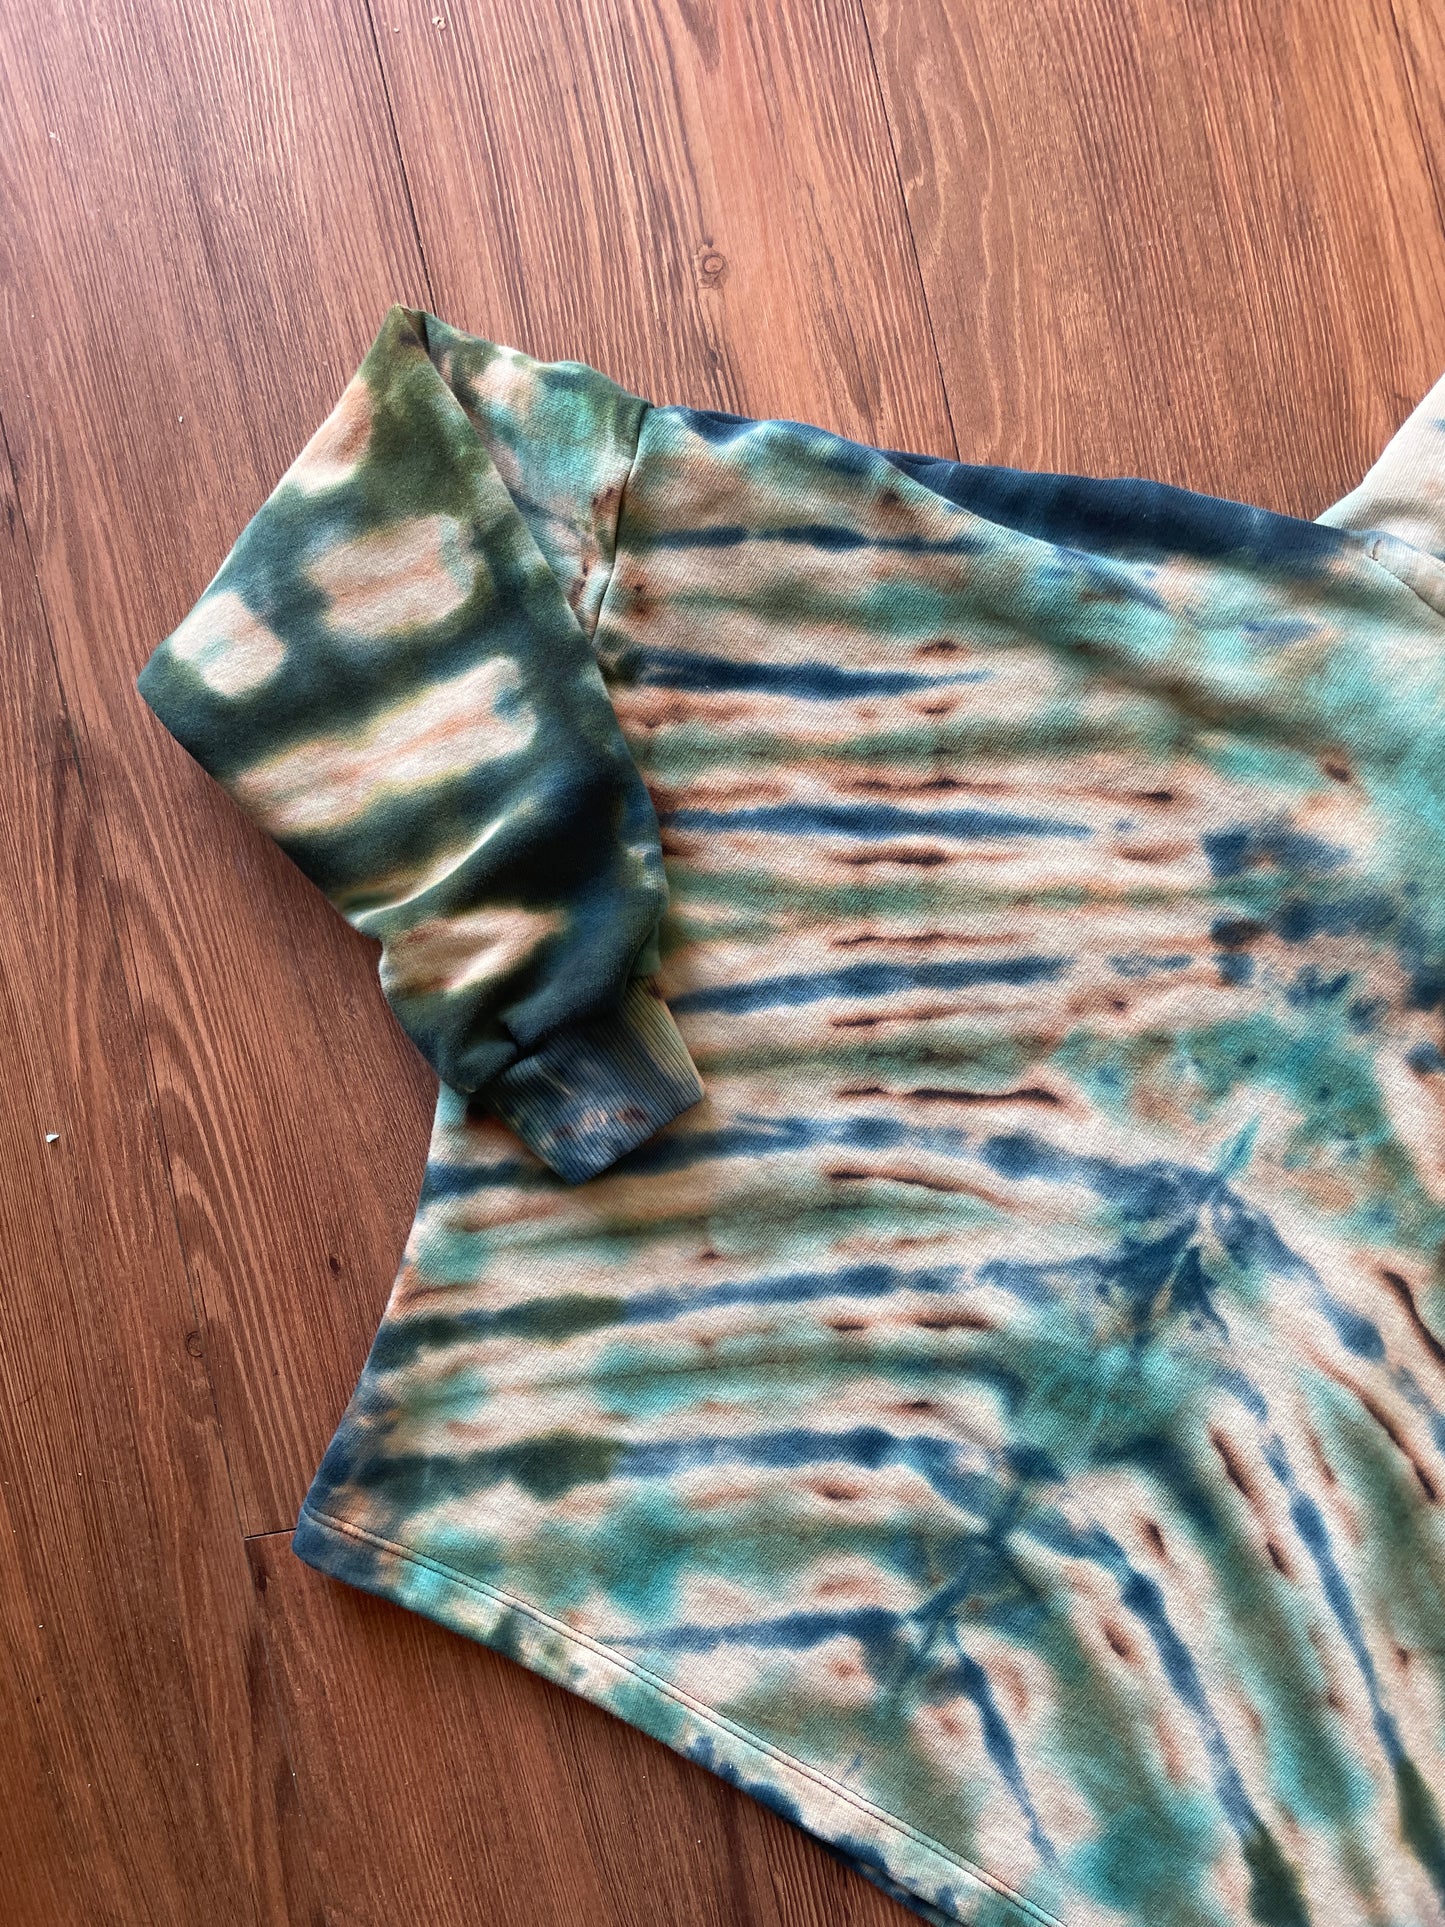 MEDIUM Women’s Puma Handmade Tie Dye Cropped Hoodie | One-Of-a-Kind Black and Blue Long Sleeve Sweatshirt